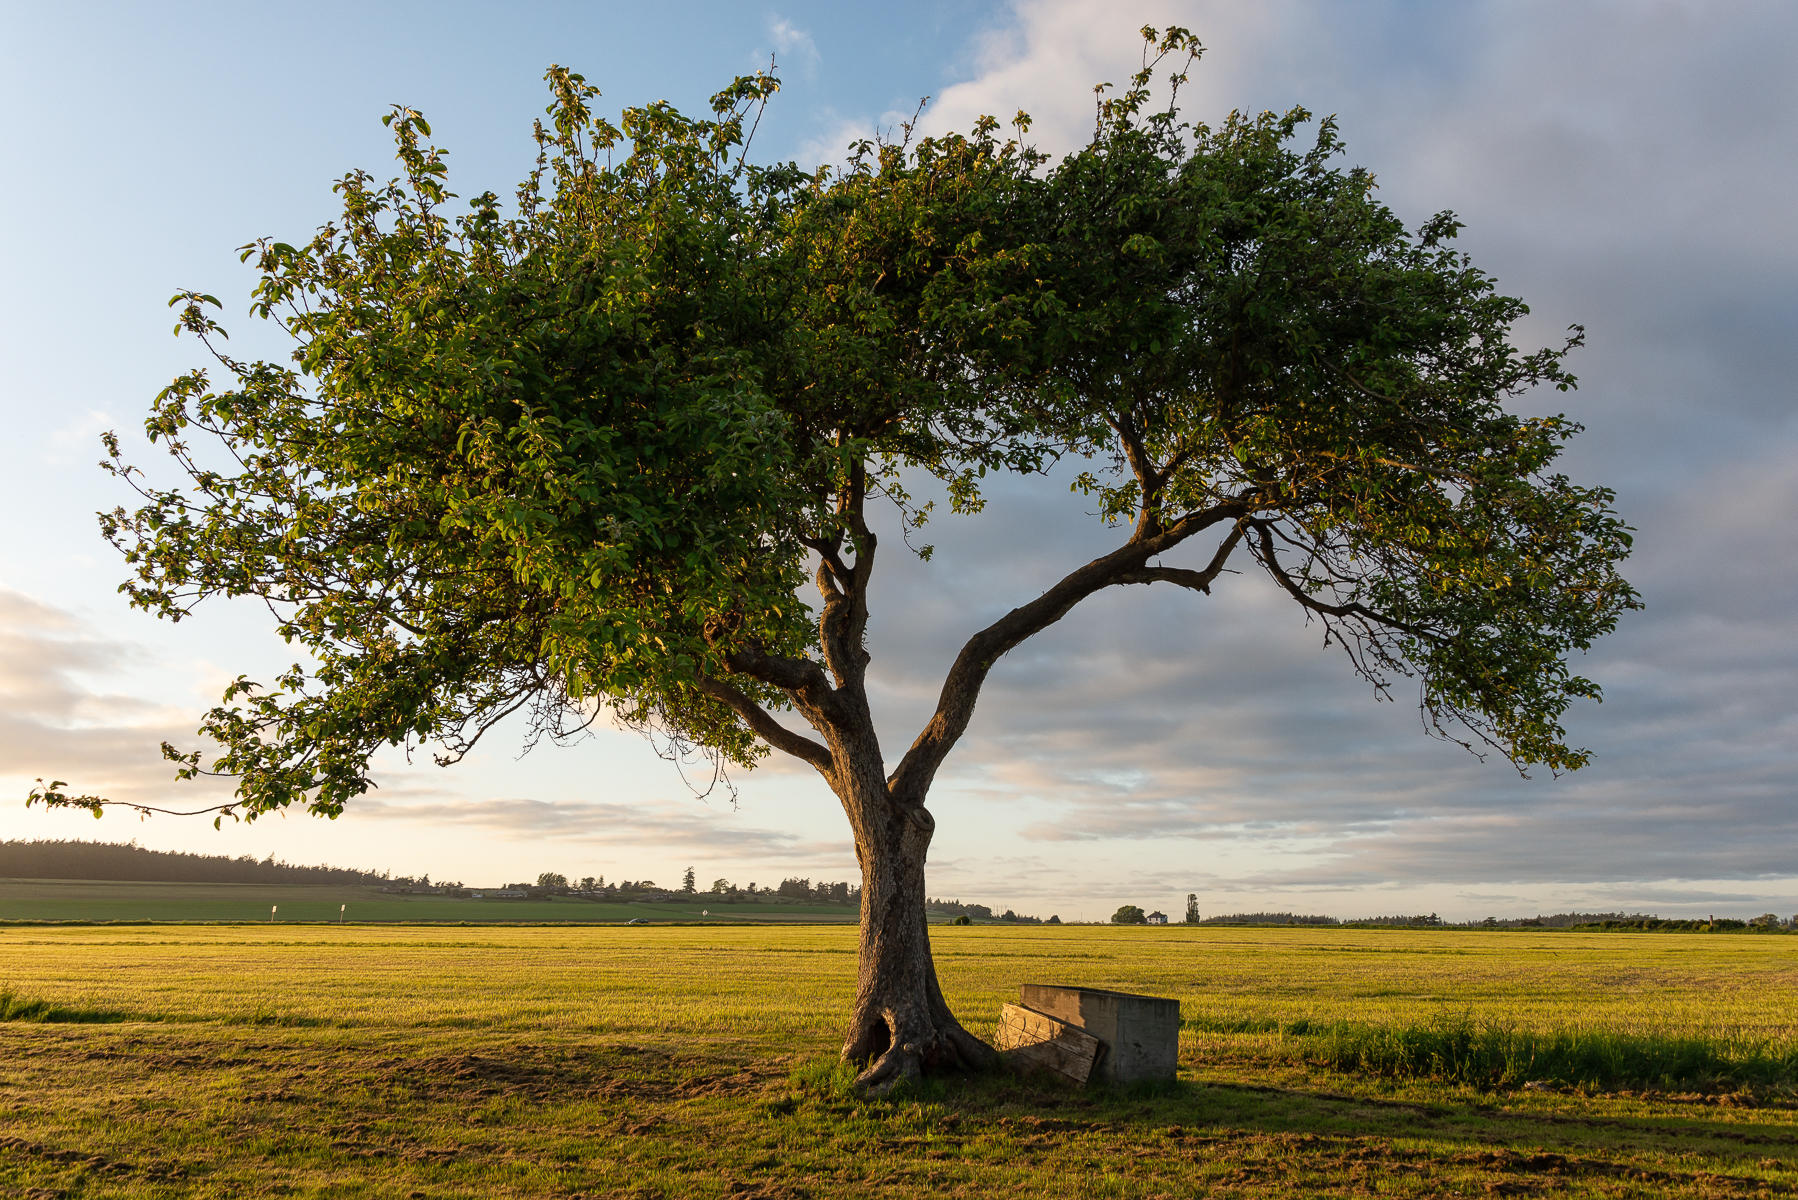 Under the Tree, Washington : Trees, Our Oxygen : ELIZABETH SANJUAN PHOTOGRAPHY